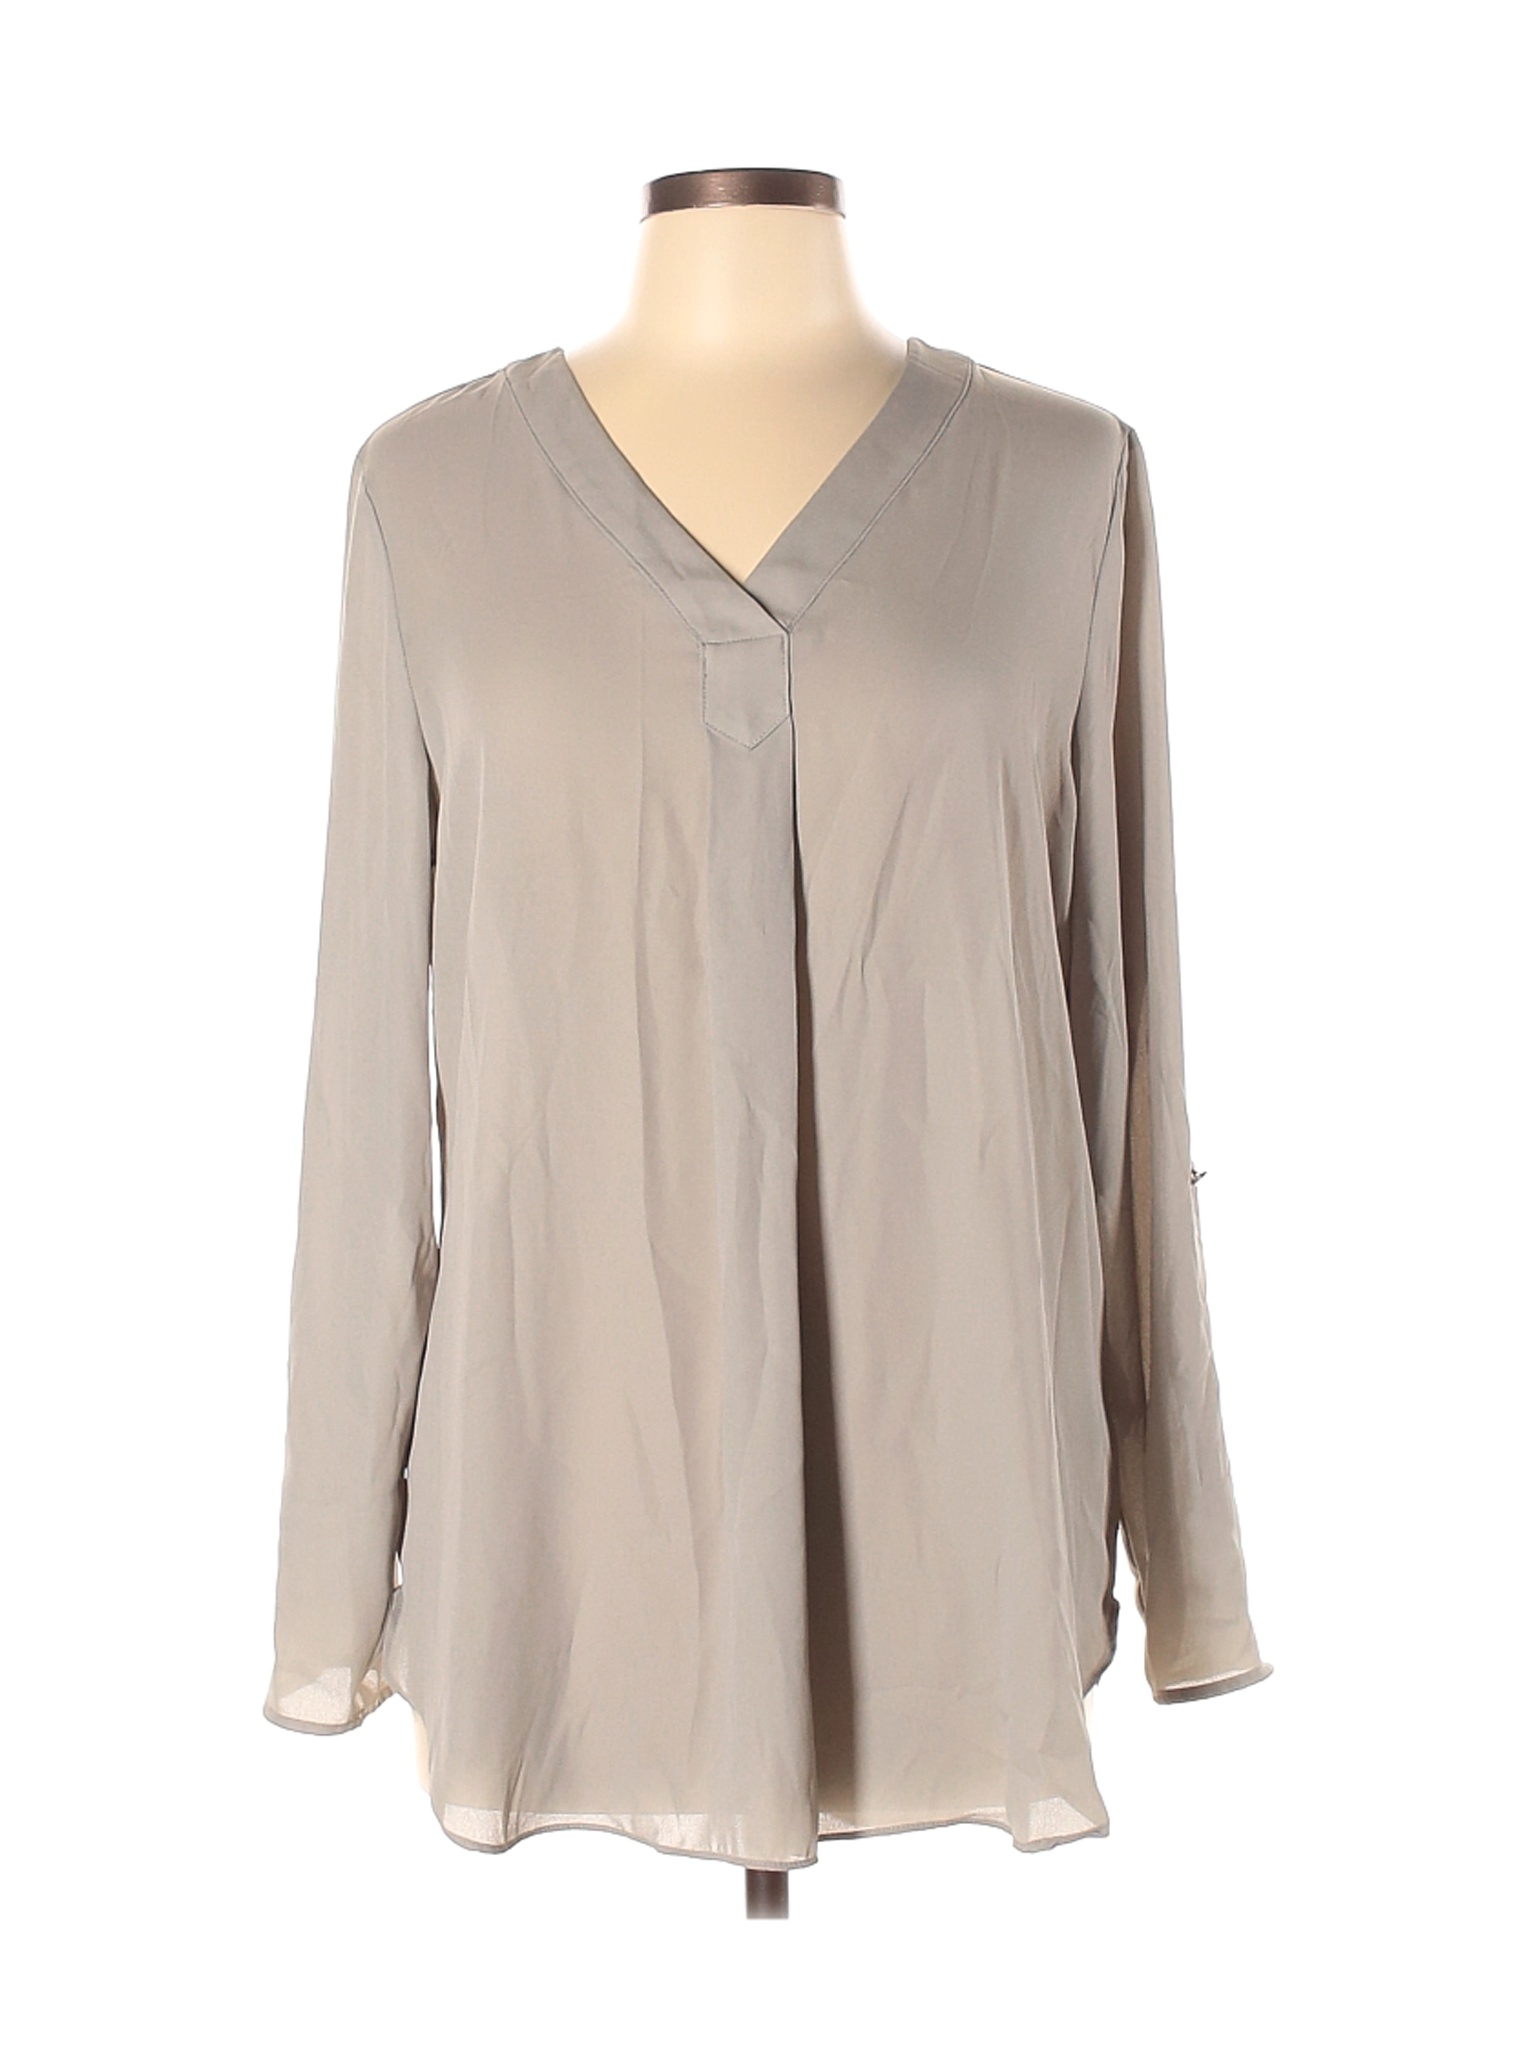 Apt. 9 Women Gray Long Sleeve Blouse L | eBay